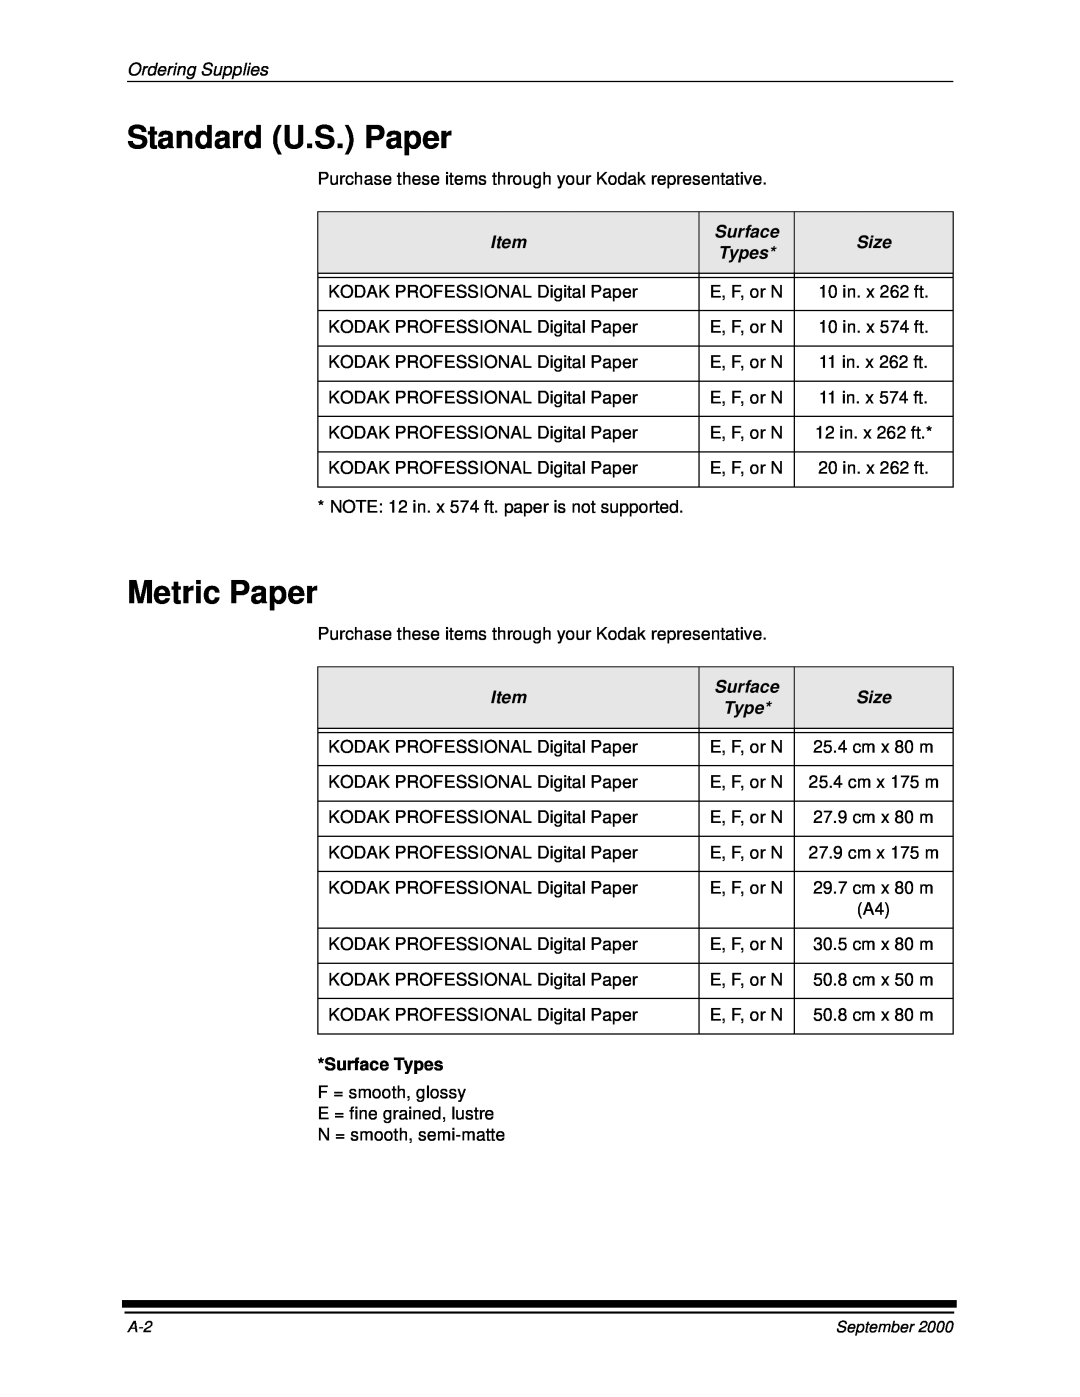 Kodak 20R manual Standard U.S. Paper, Metric Paper, Ordering Supplies, Surface Types 